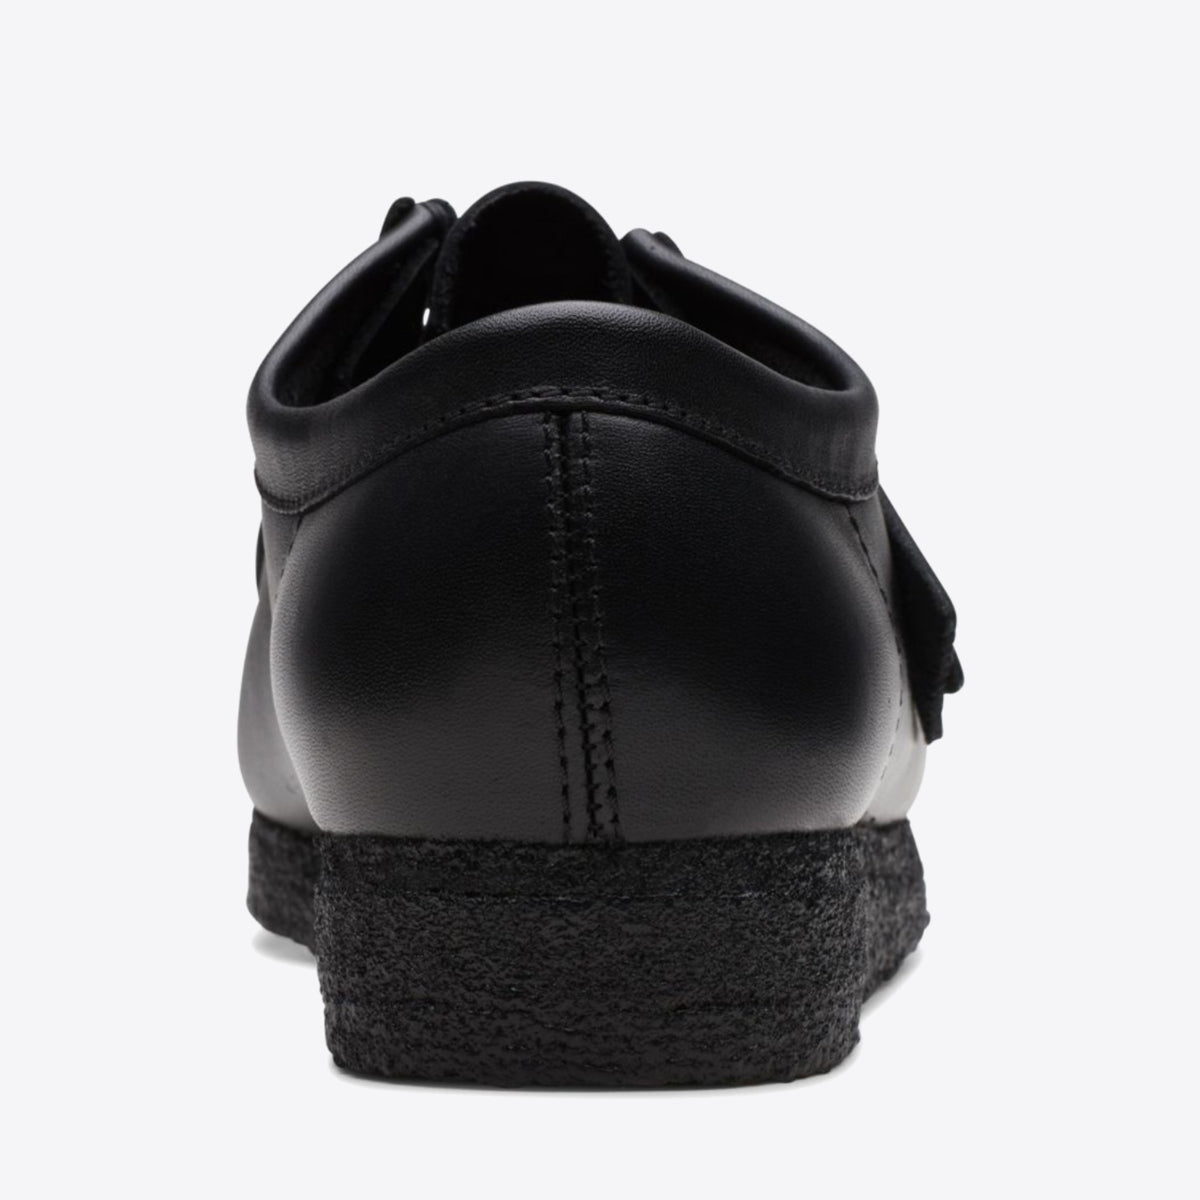 CLARKS Wallabee Shoe Leather Black - Image 6